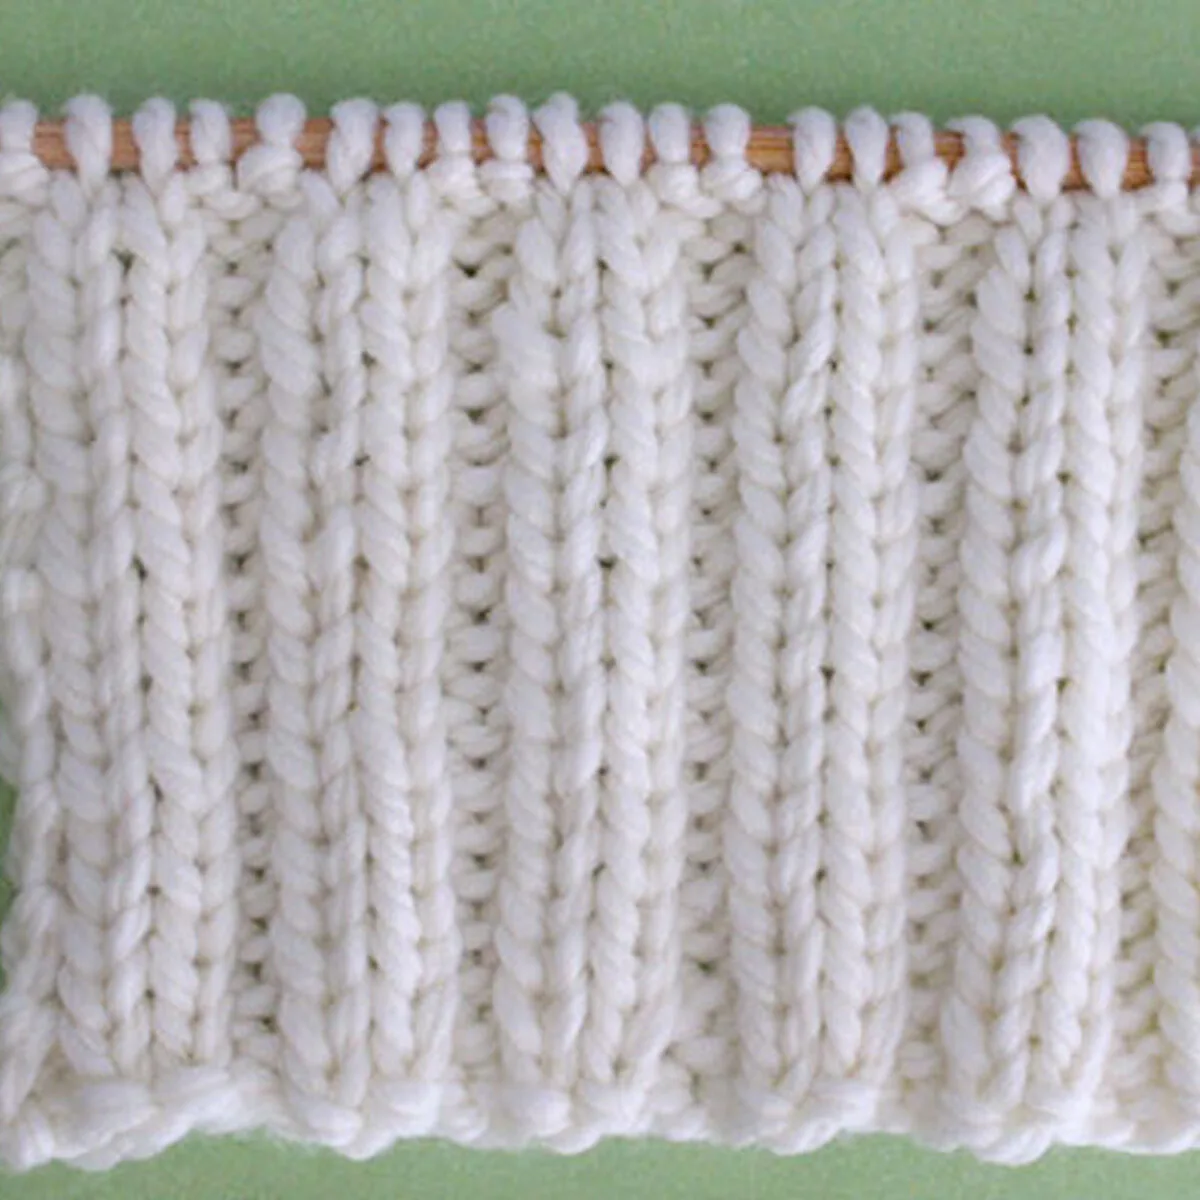 2x2 Rib Stitch Knitting Pattern in white yarn on knitting needle